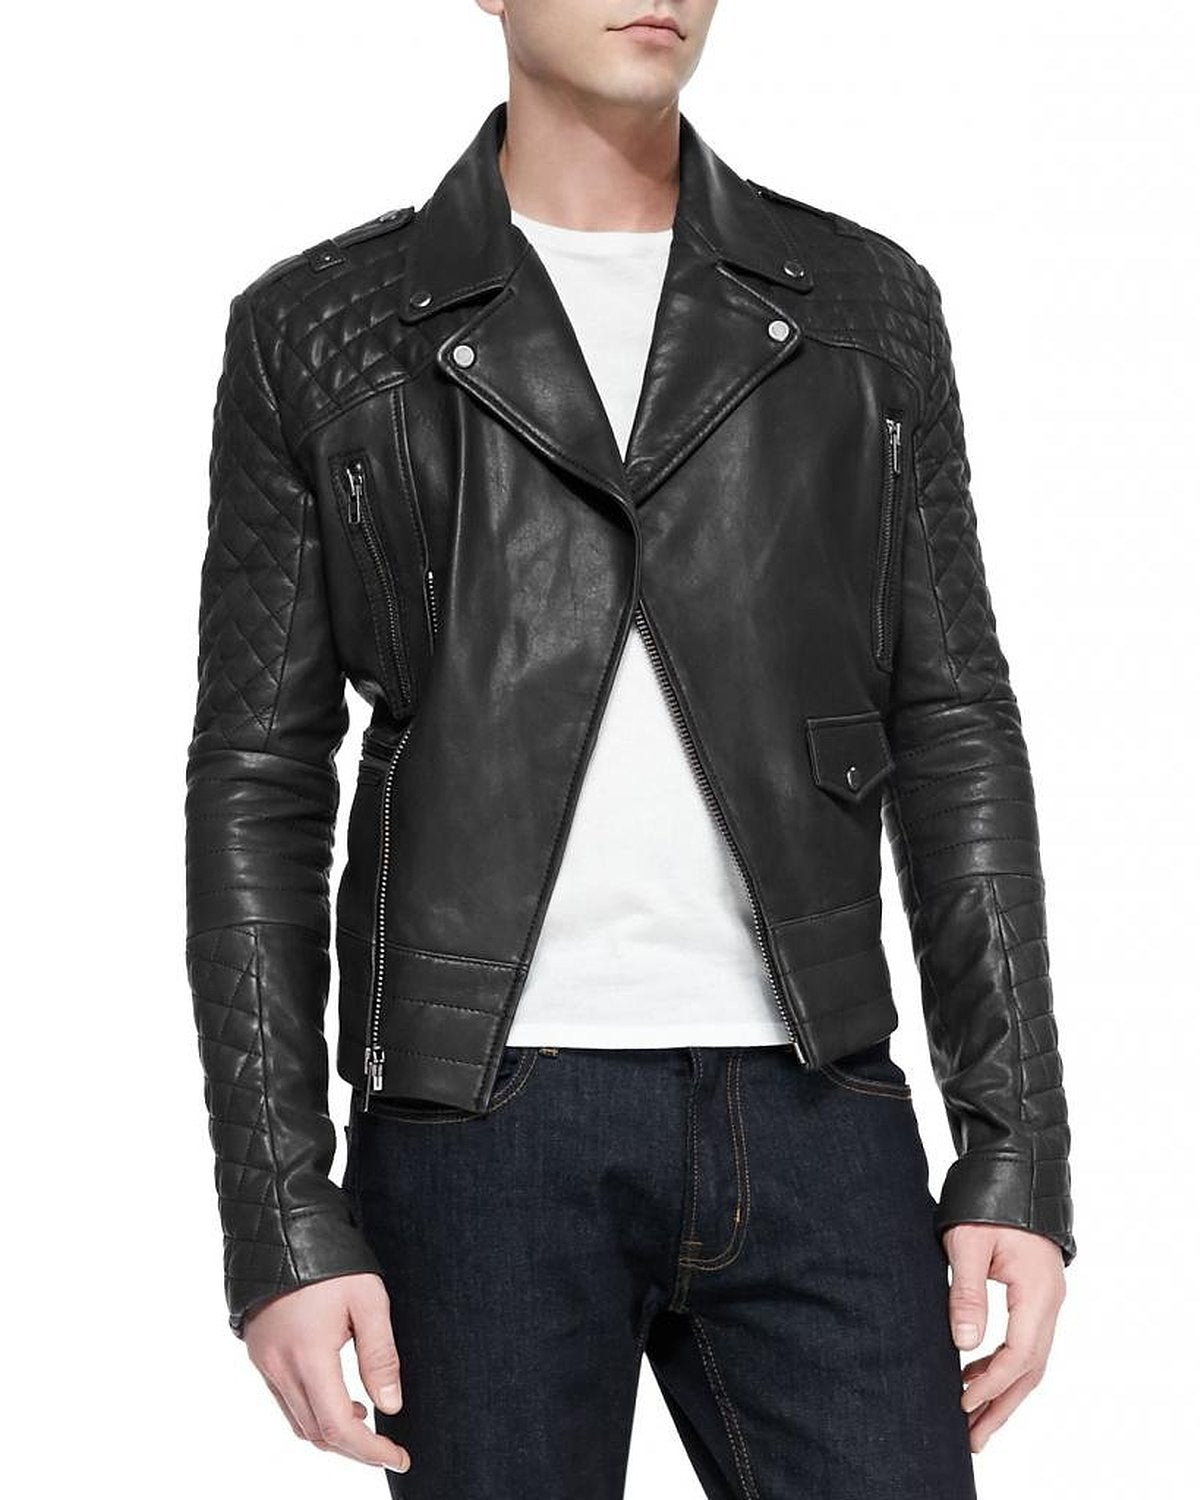 Leather Jackets Hub Mens Genuine Cowhide Leather Jacket (Black, Double Rider Jacket) - 1501612